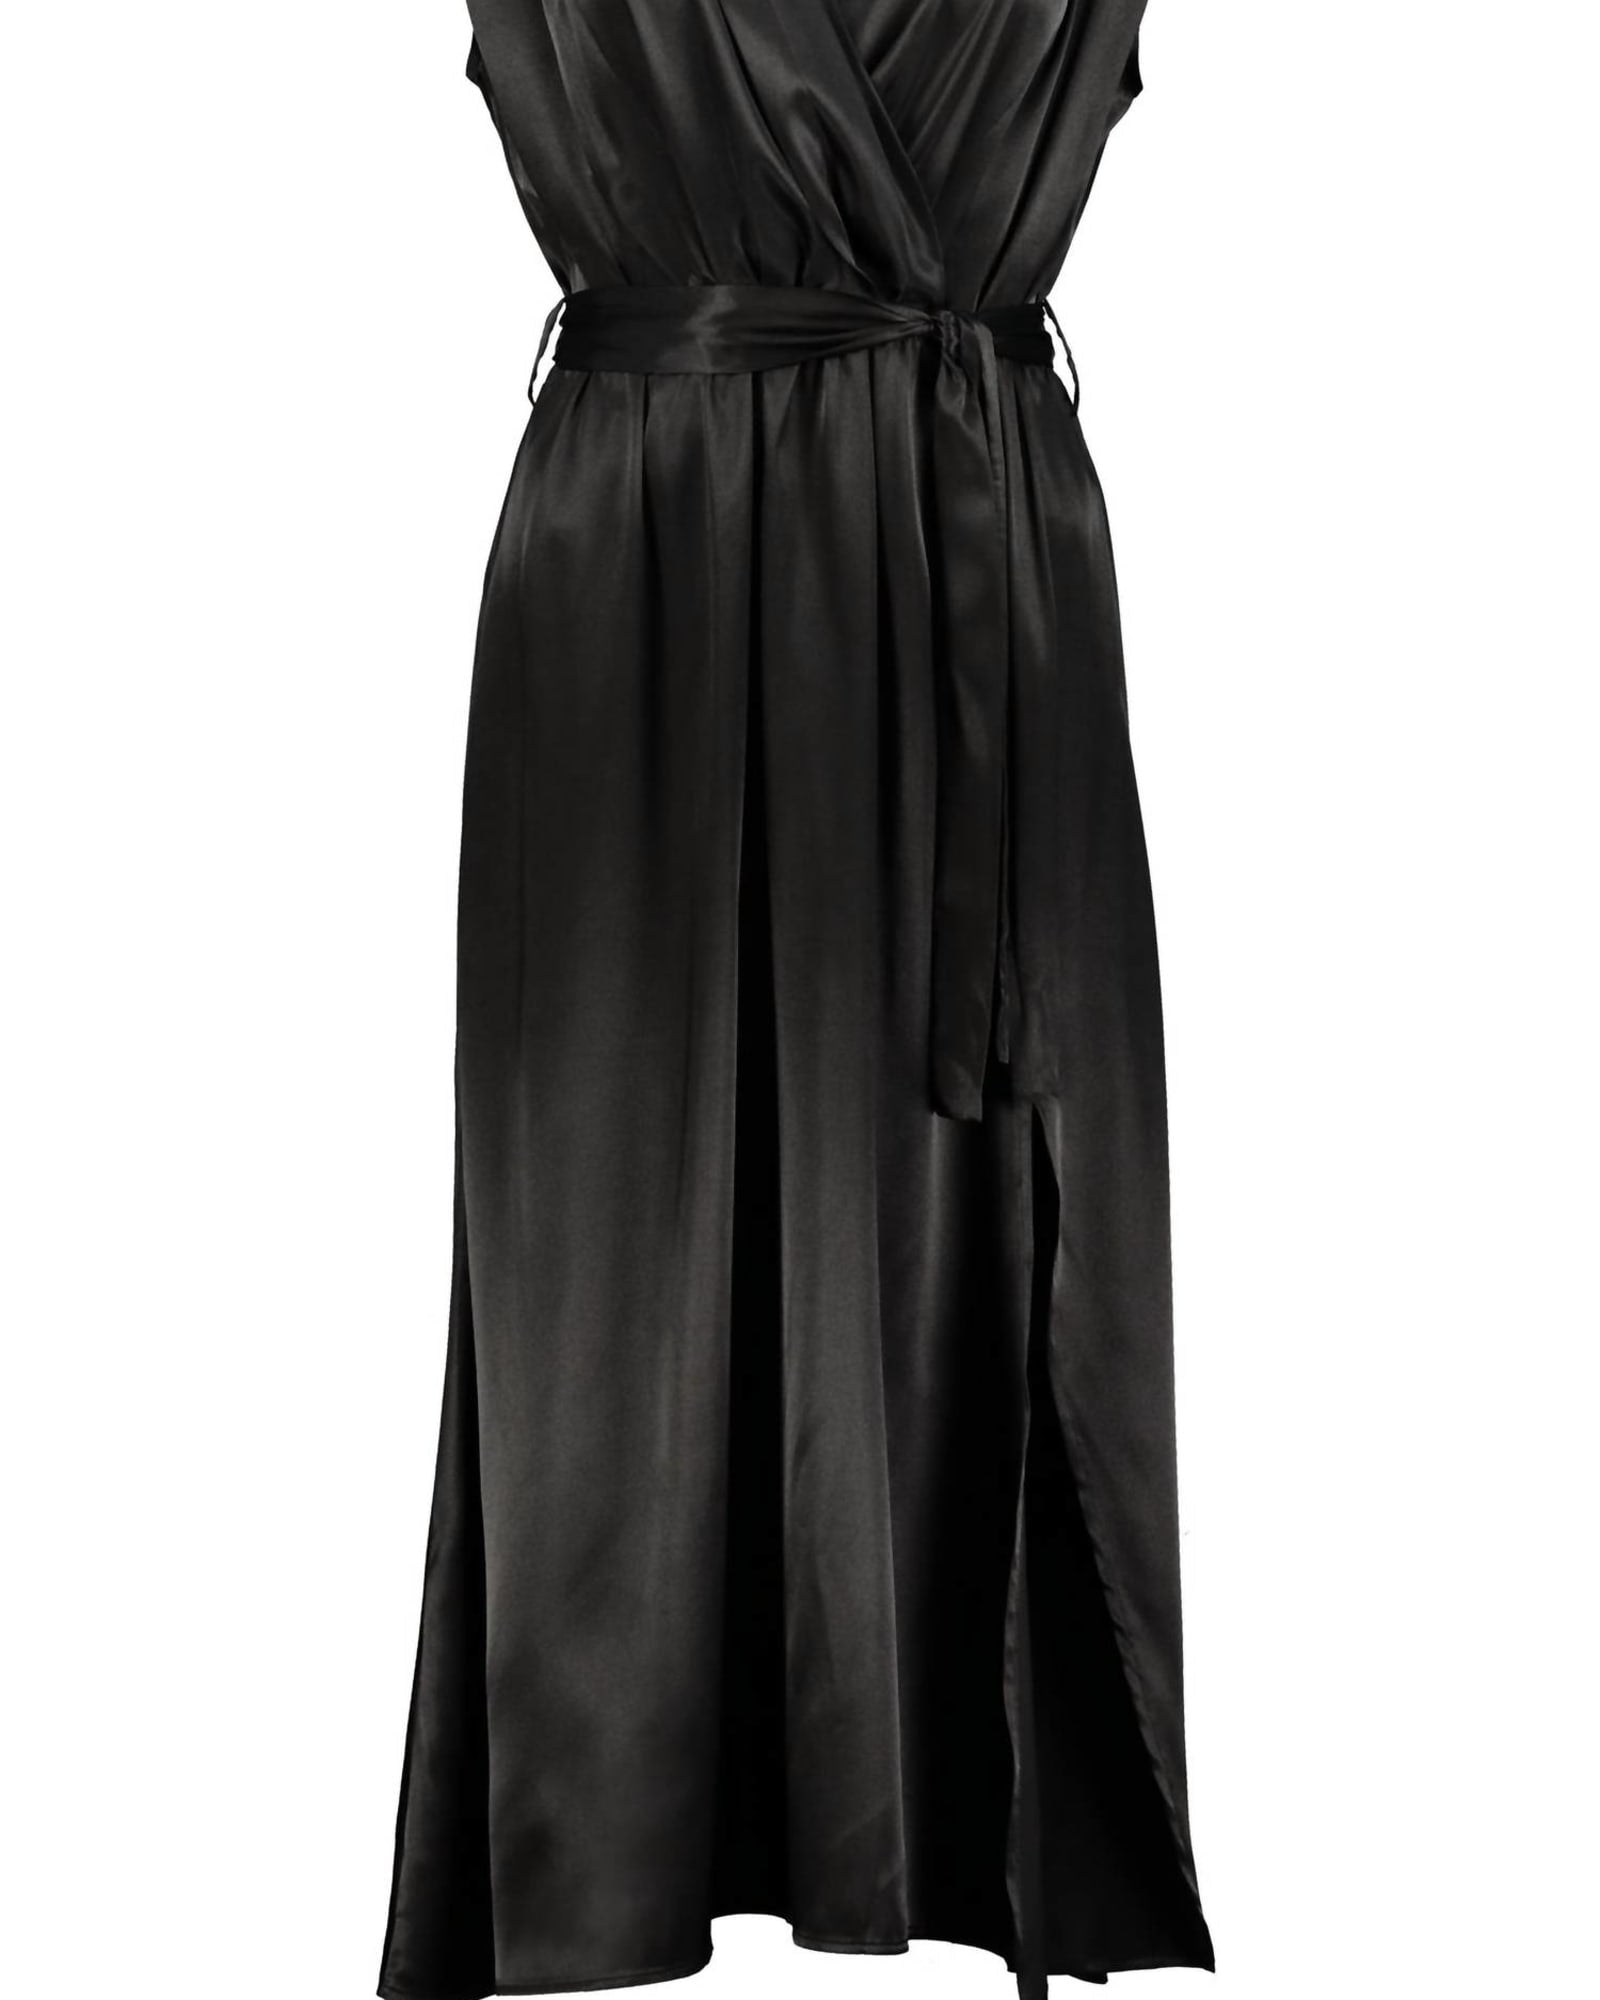 Aeries Satin Wrap Dress in Black | Black